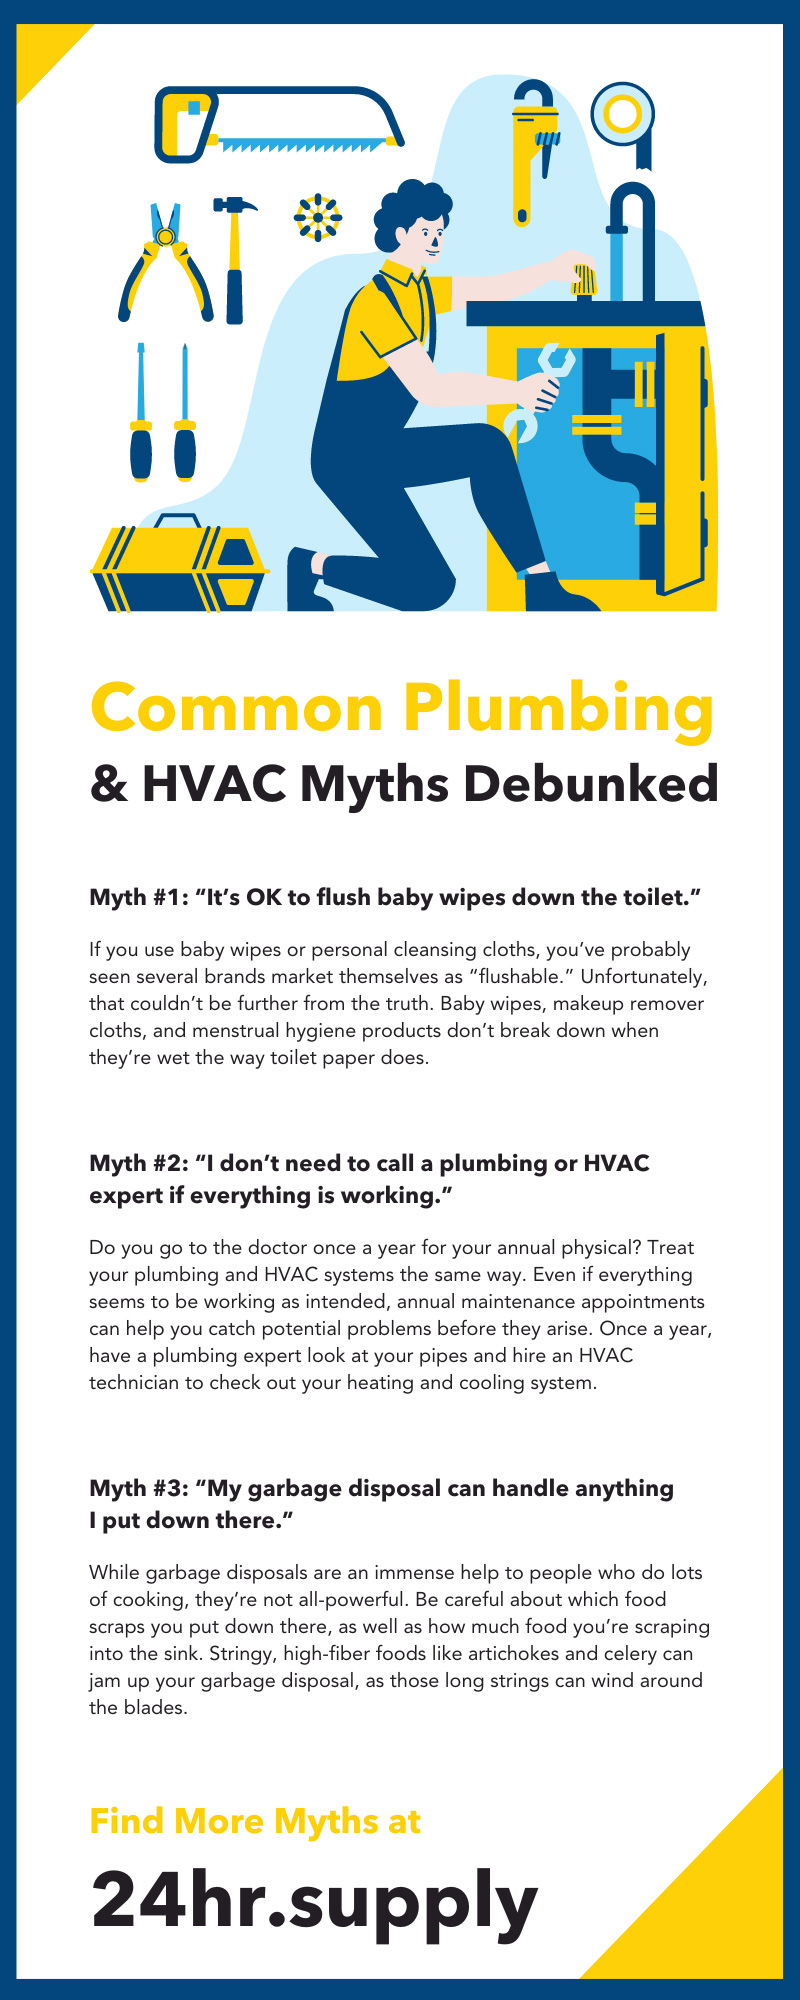 10 Common Plumbing & HVAC Myths Debunked